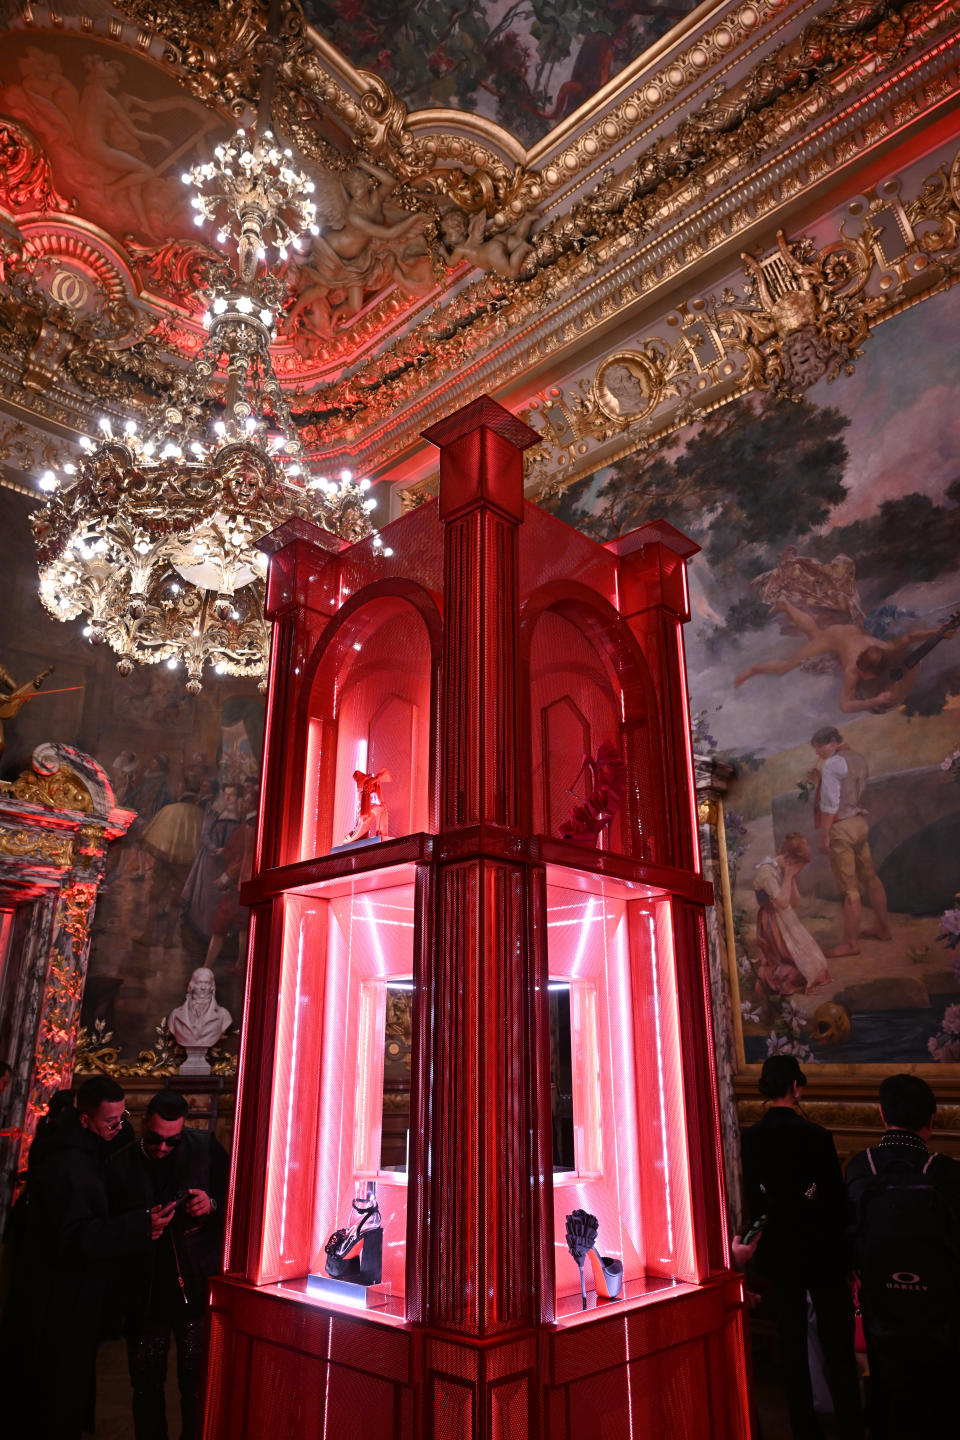 Inside "The Loubi Show" in Paris.